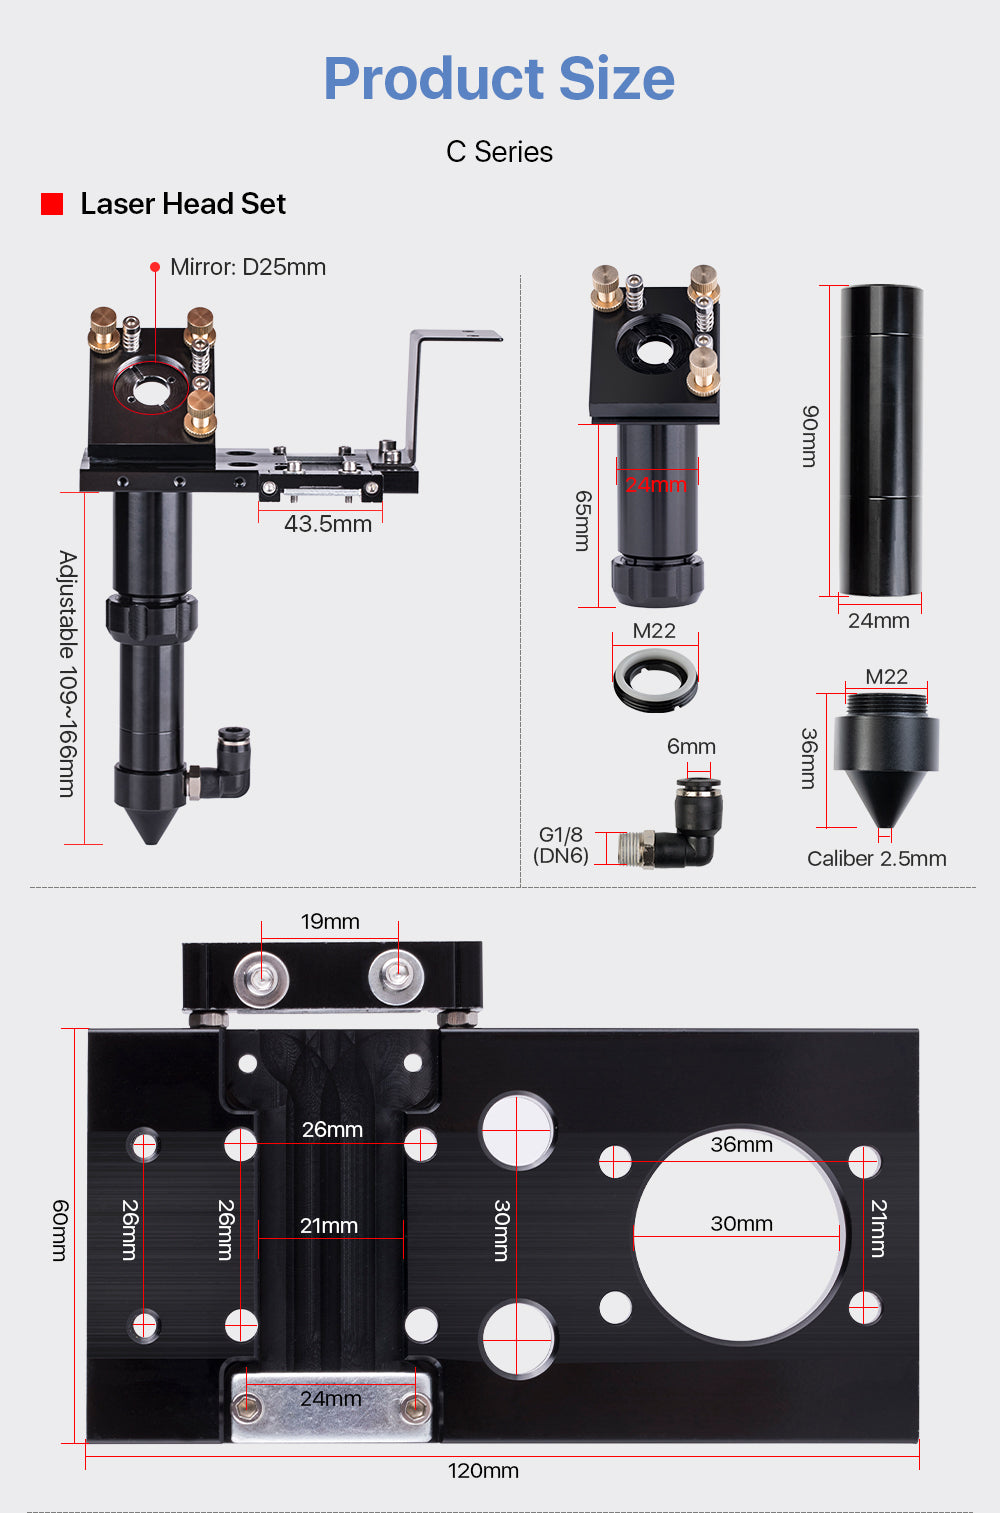 CO2 Laser Head Set + 1 Pcs Focus Lens18/20mm + 3 Pcs Reflective Mirror 25mm for CO2 Laser Engraving Cutting Machine